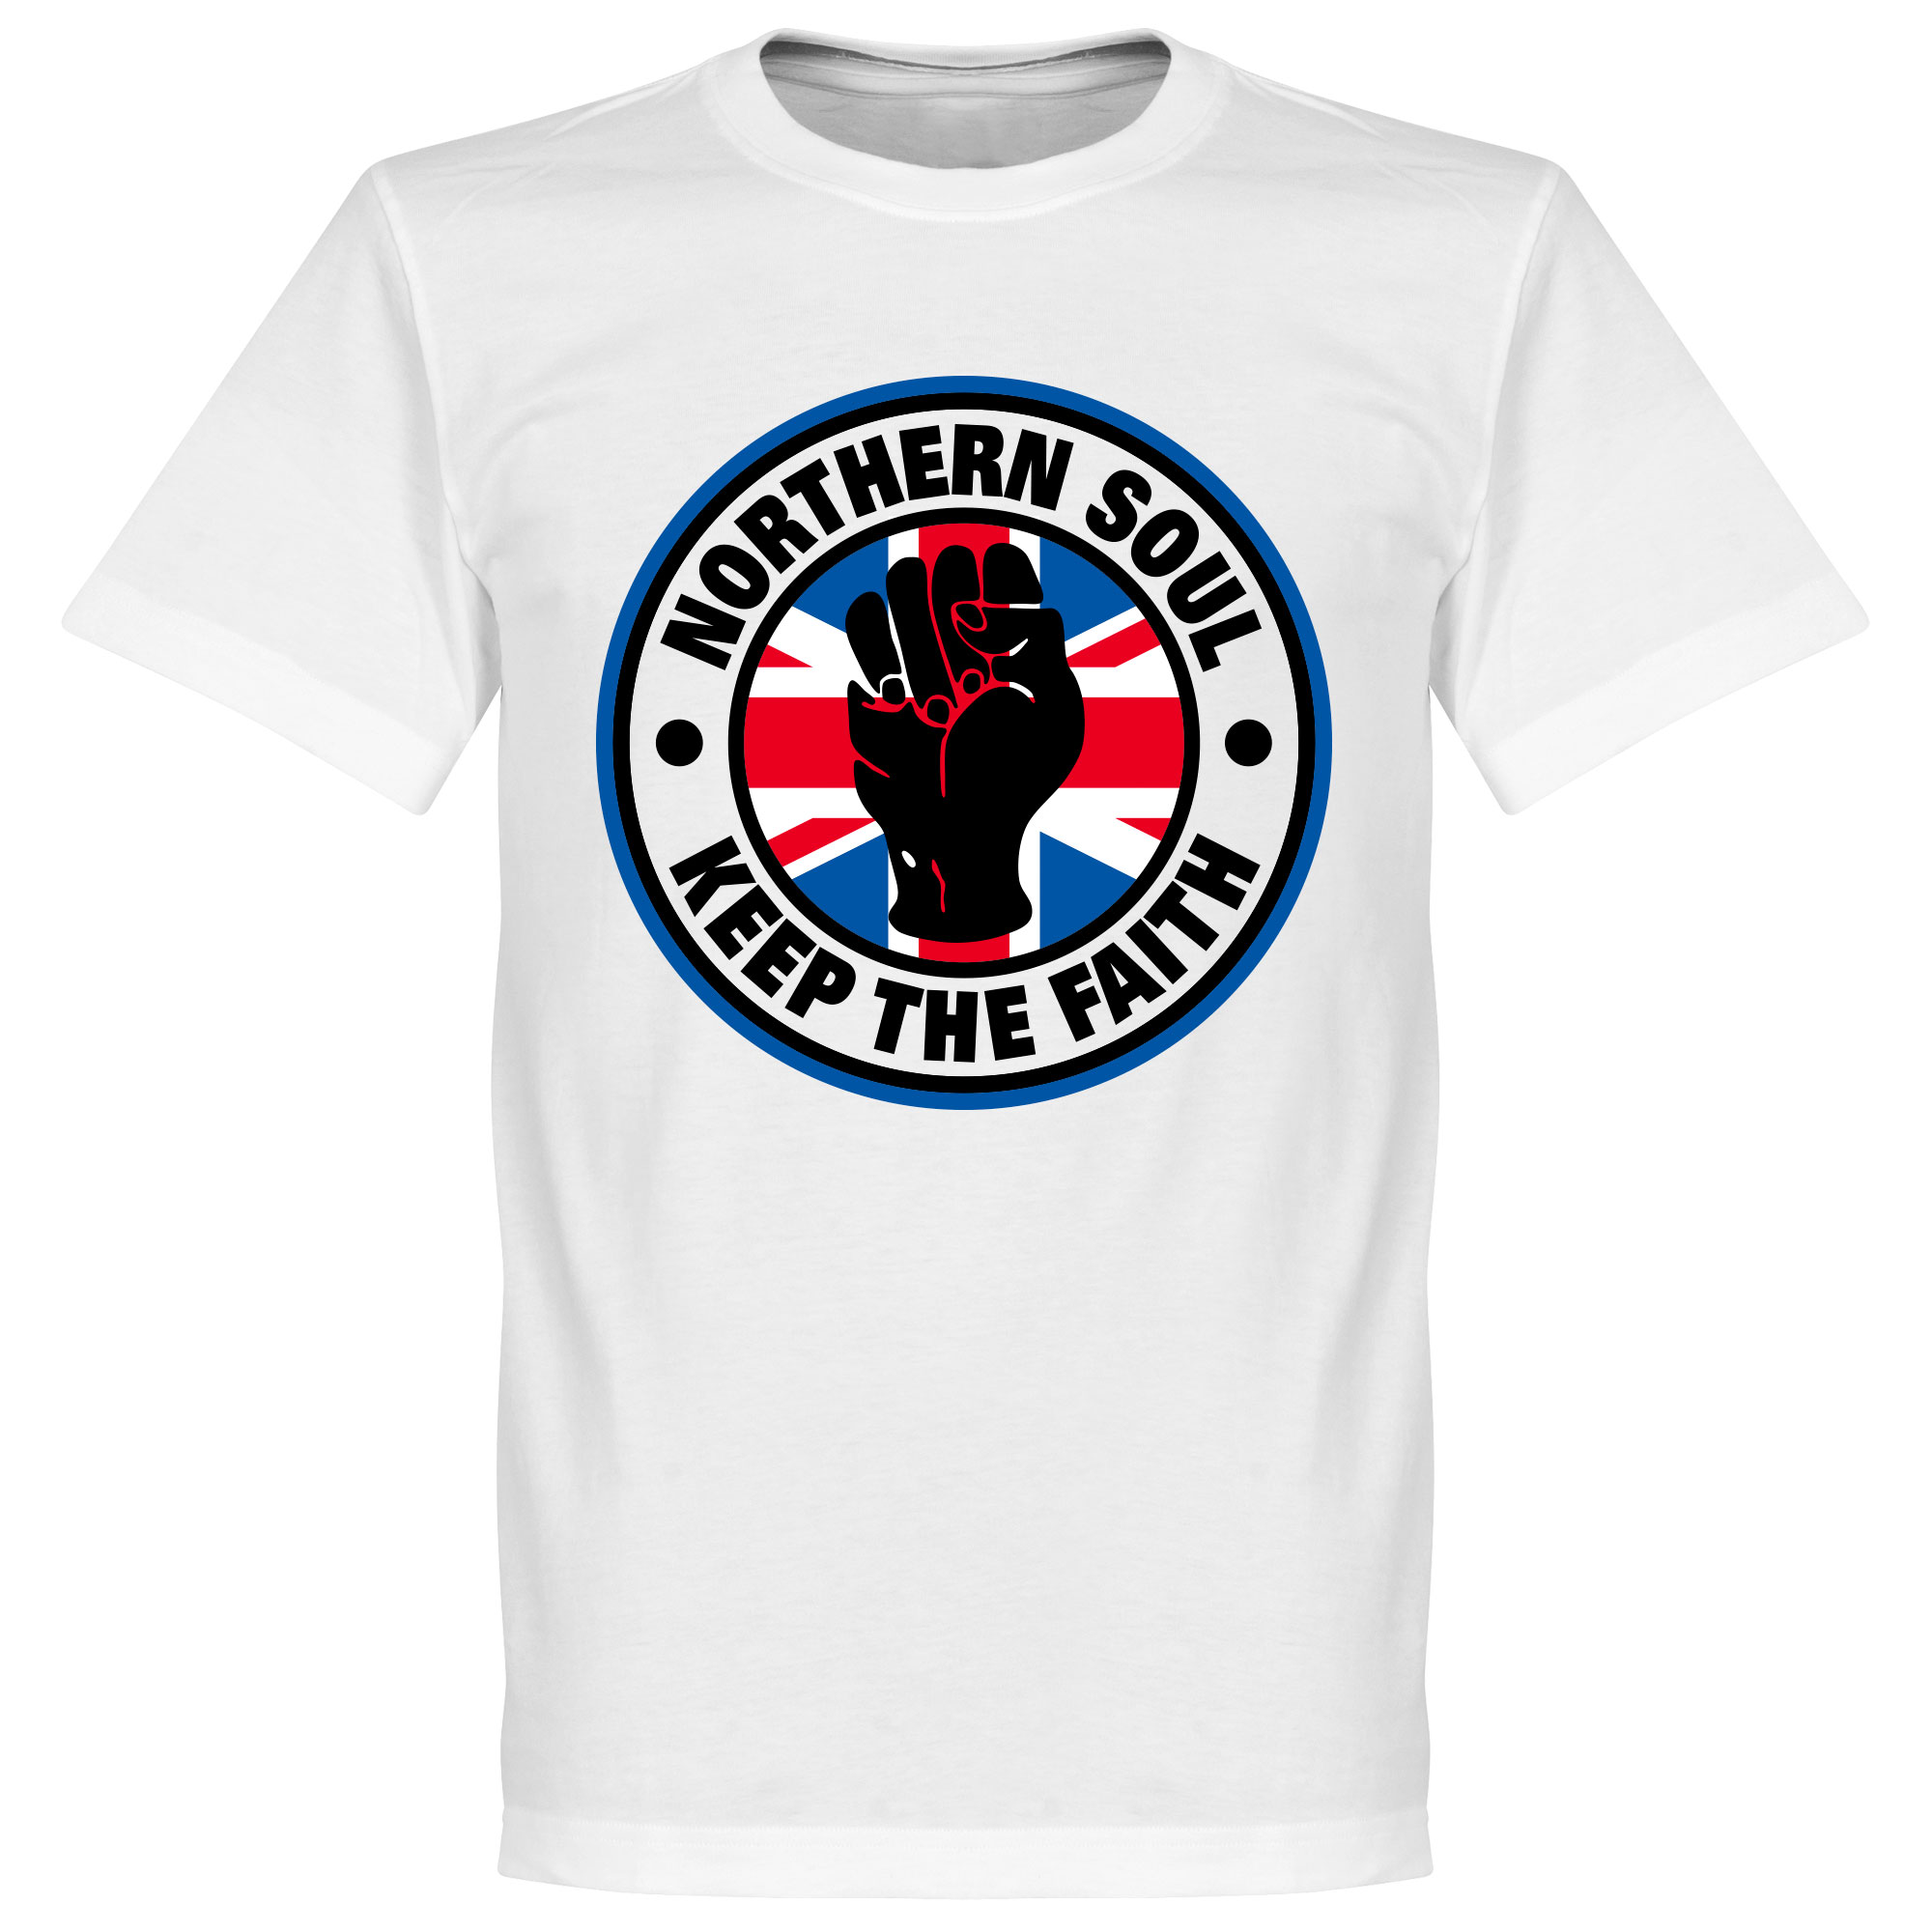 Northern Soul Union Flag T-Shirt XS